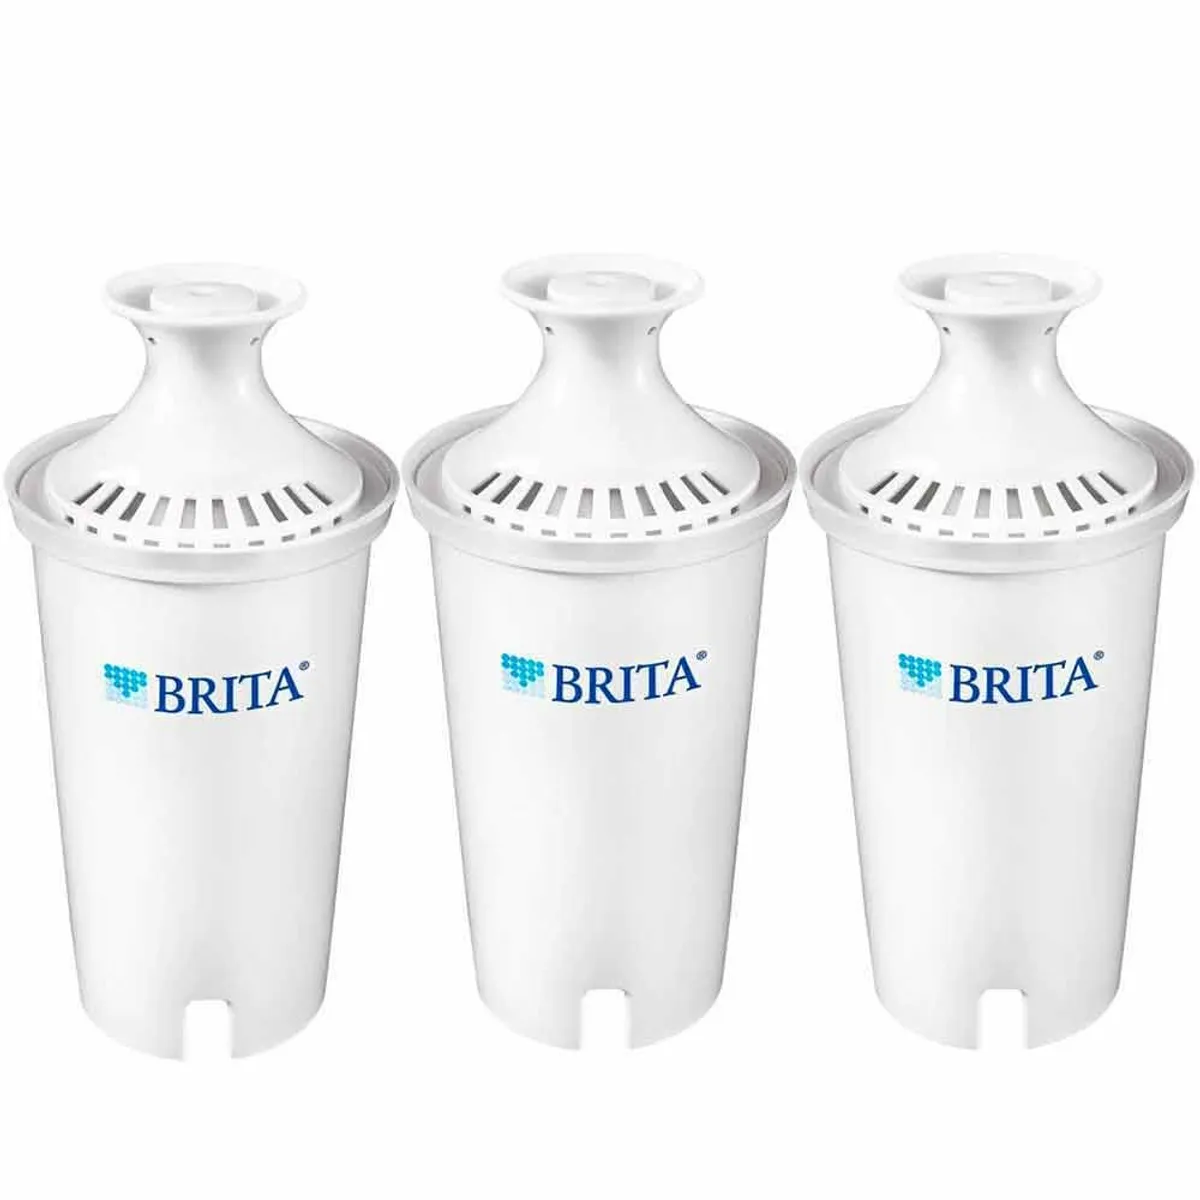 Brita Standard filters